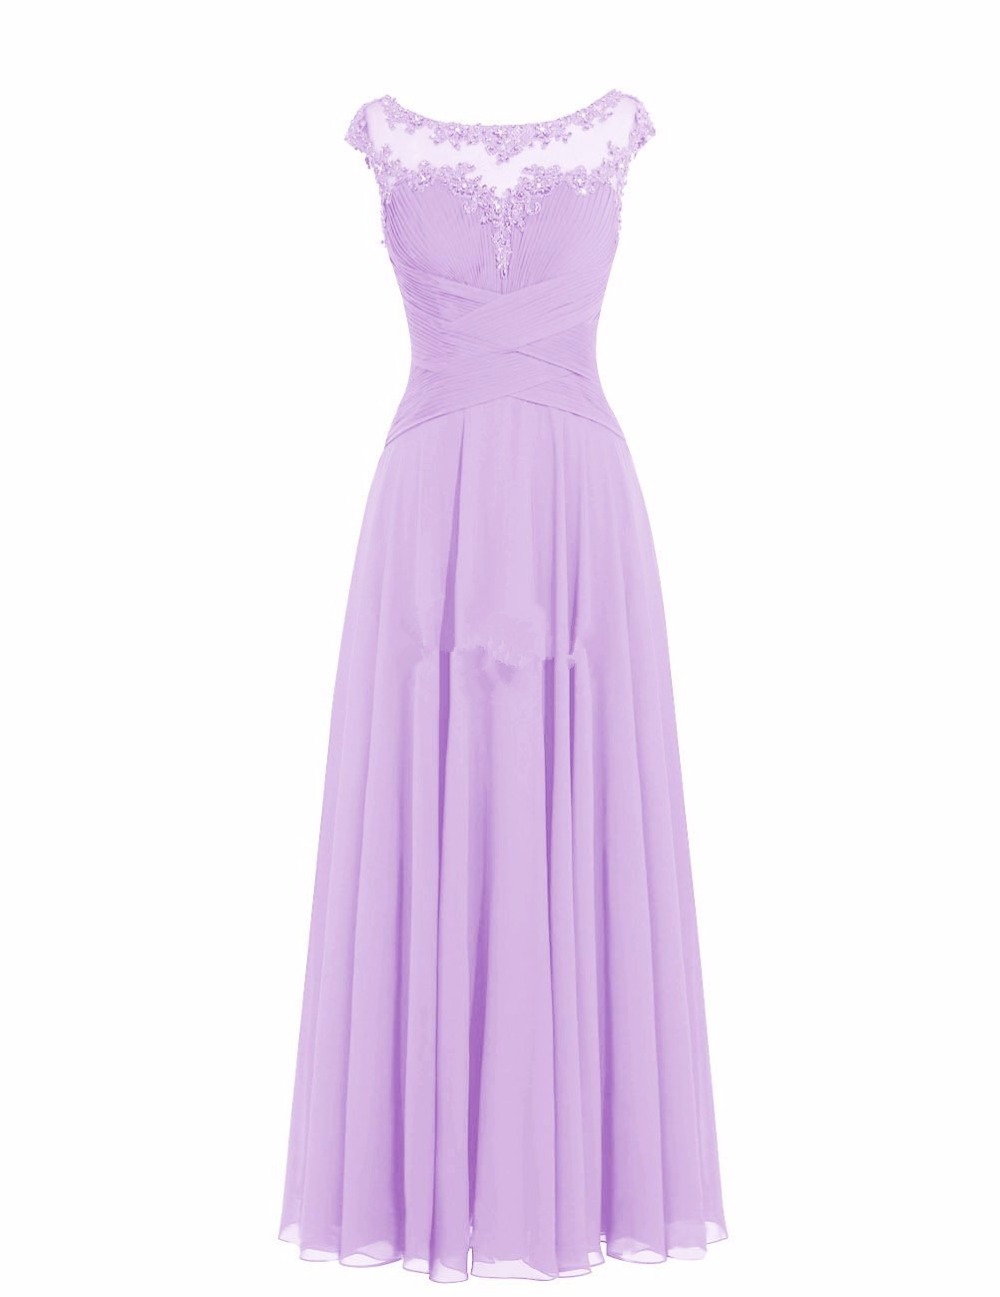 Women Sleveless Embroidered Chiffon Bridesmaid Dress Long Party Pageant Wedding Formal Dress - Light Purple